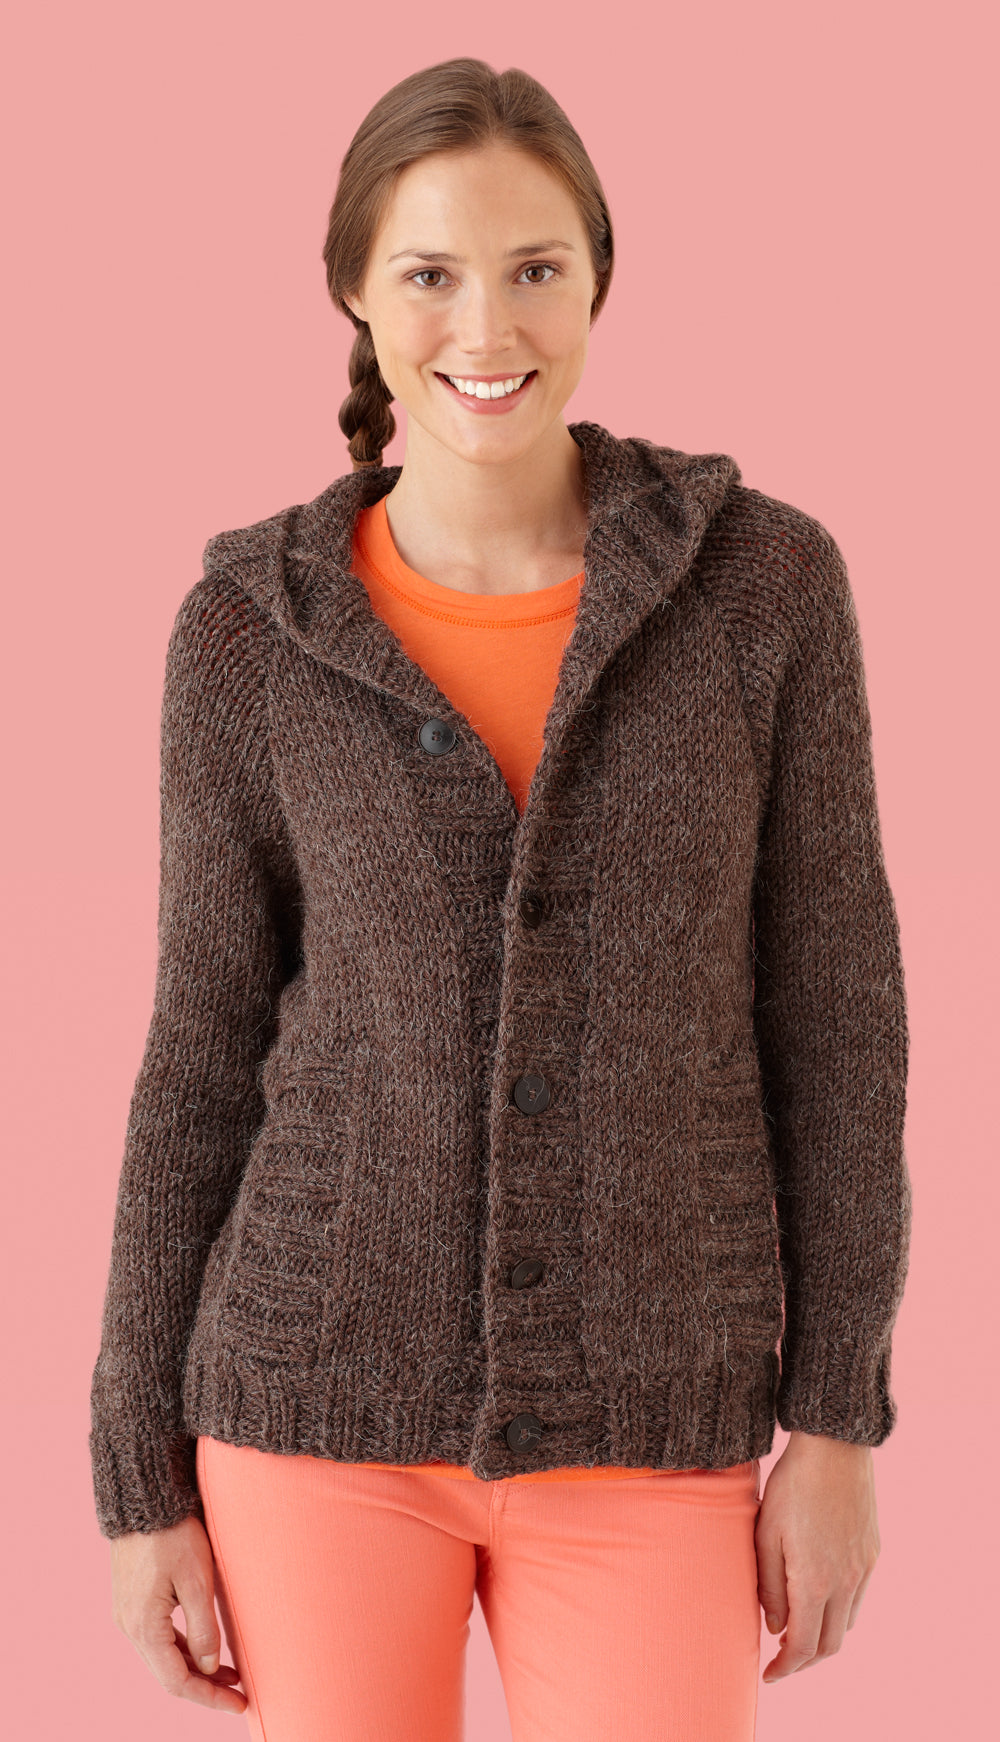 Hooded Cardigan Pattern (Knit) – Lion Brand Yarn